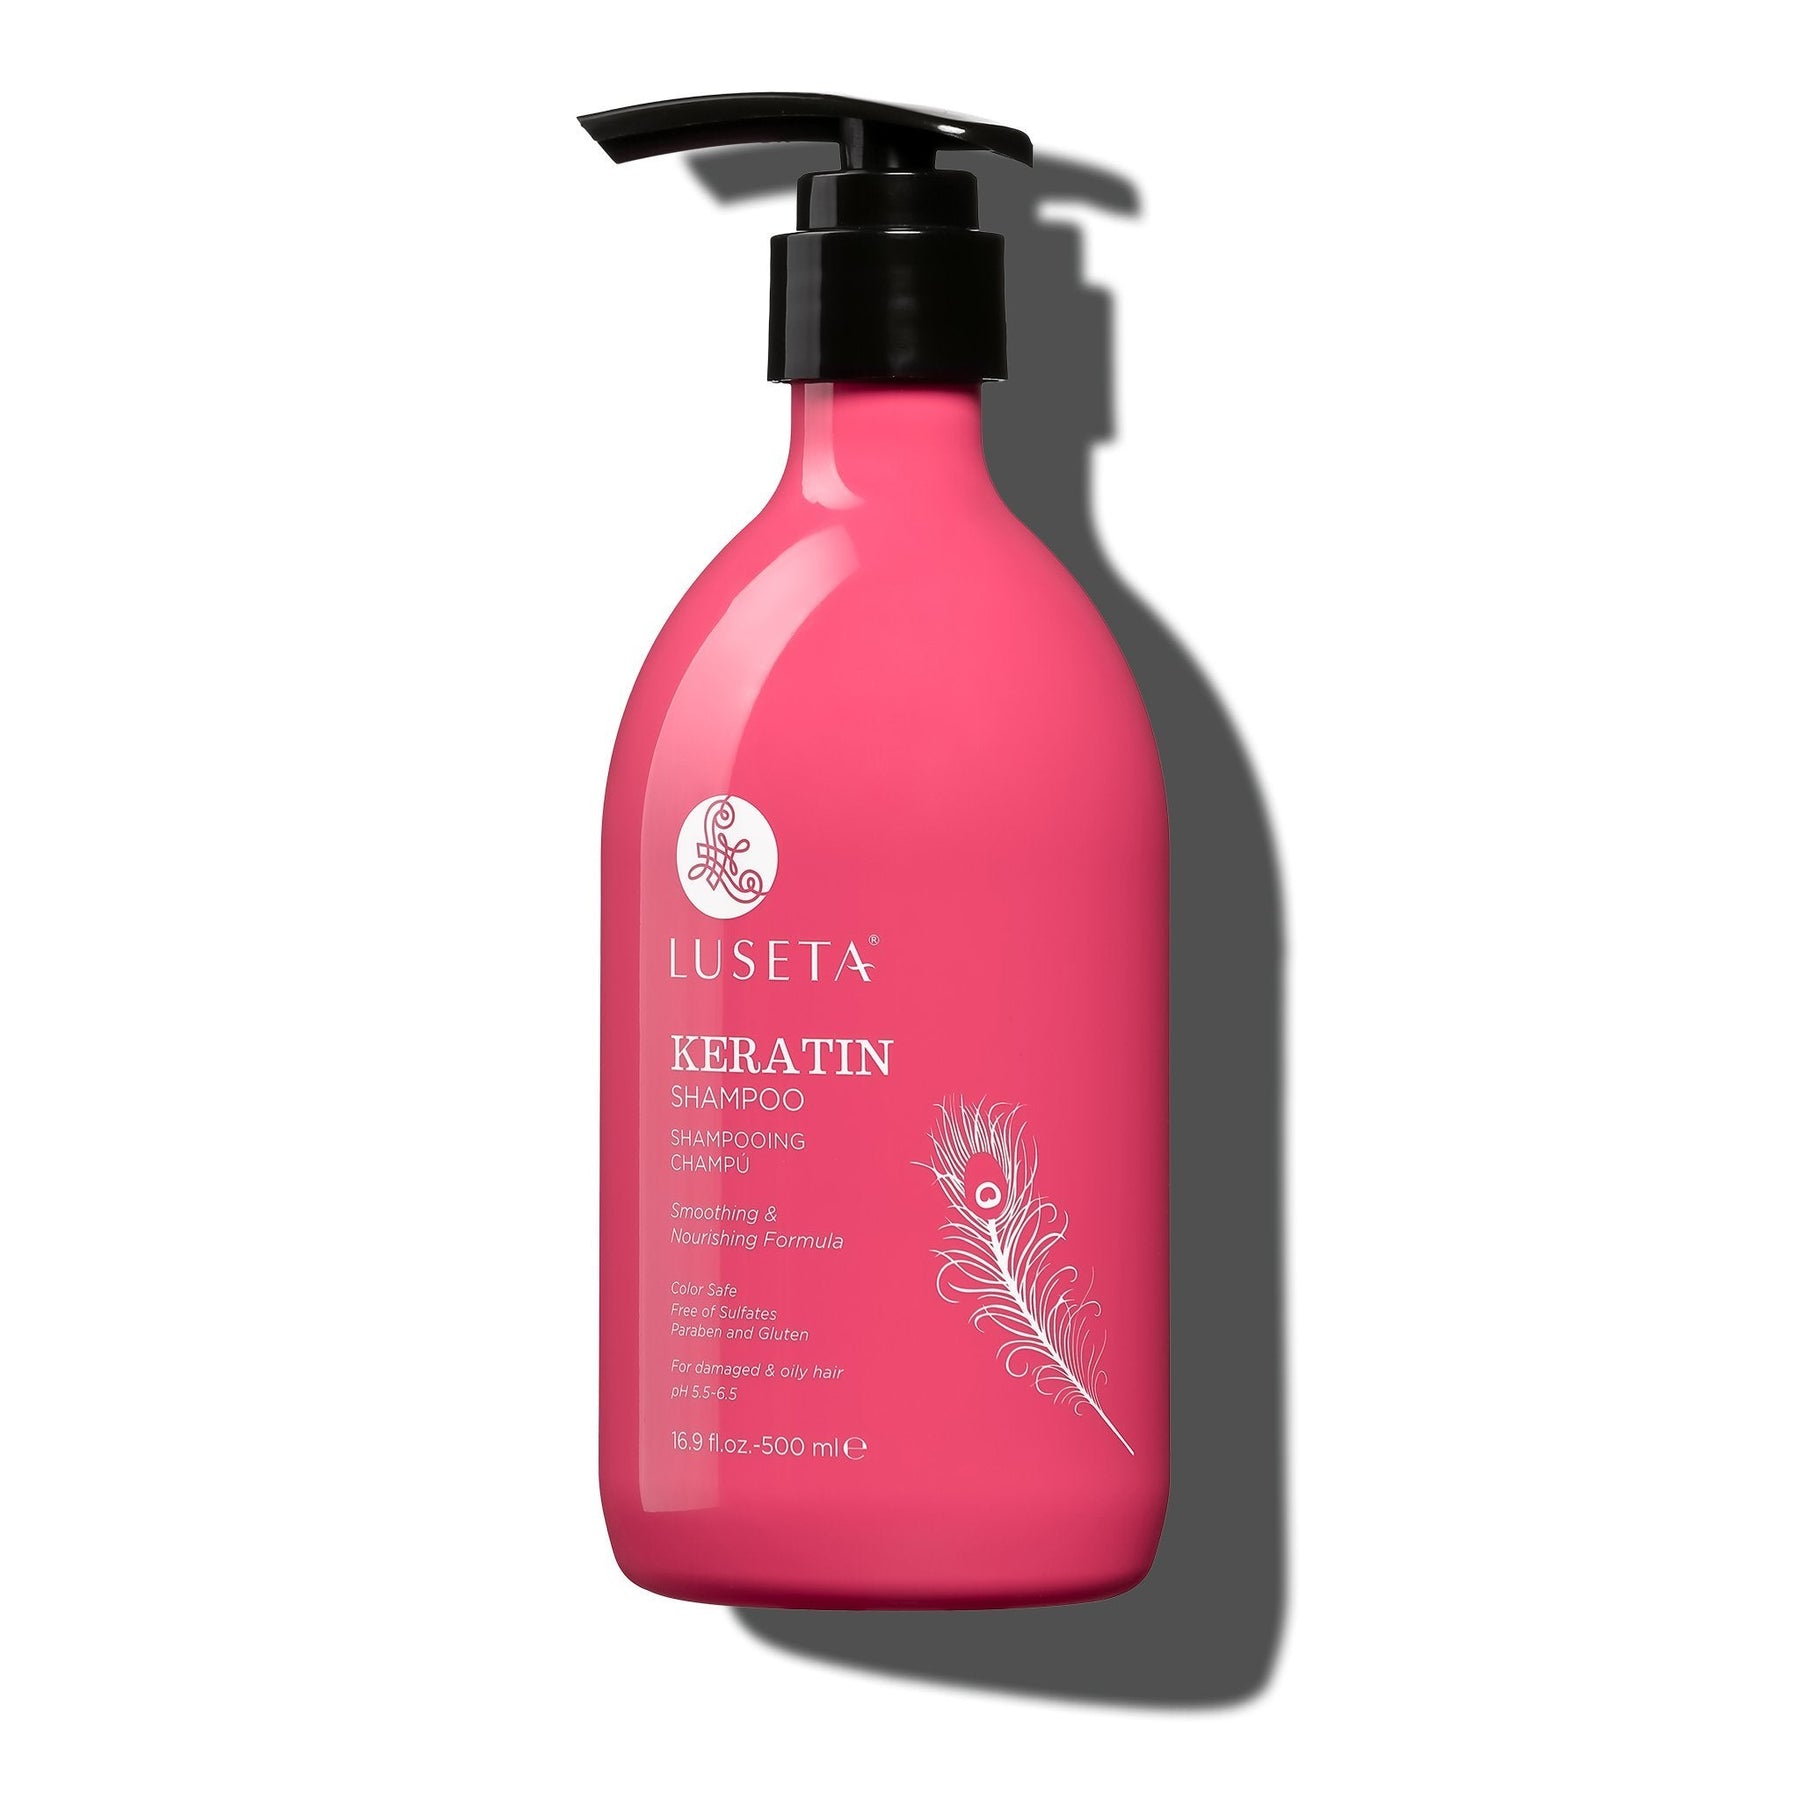 Keratin Shampoo - by Luseta Beauty |ProCare Outlet|